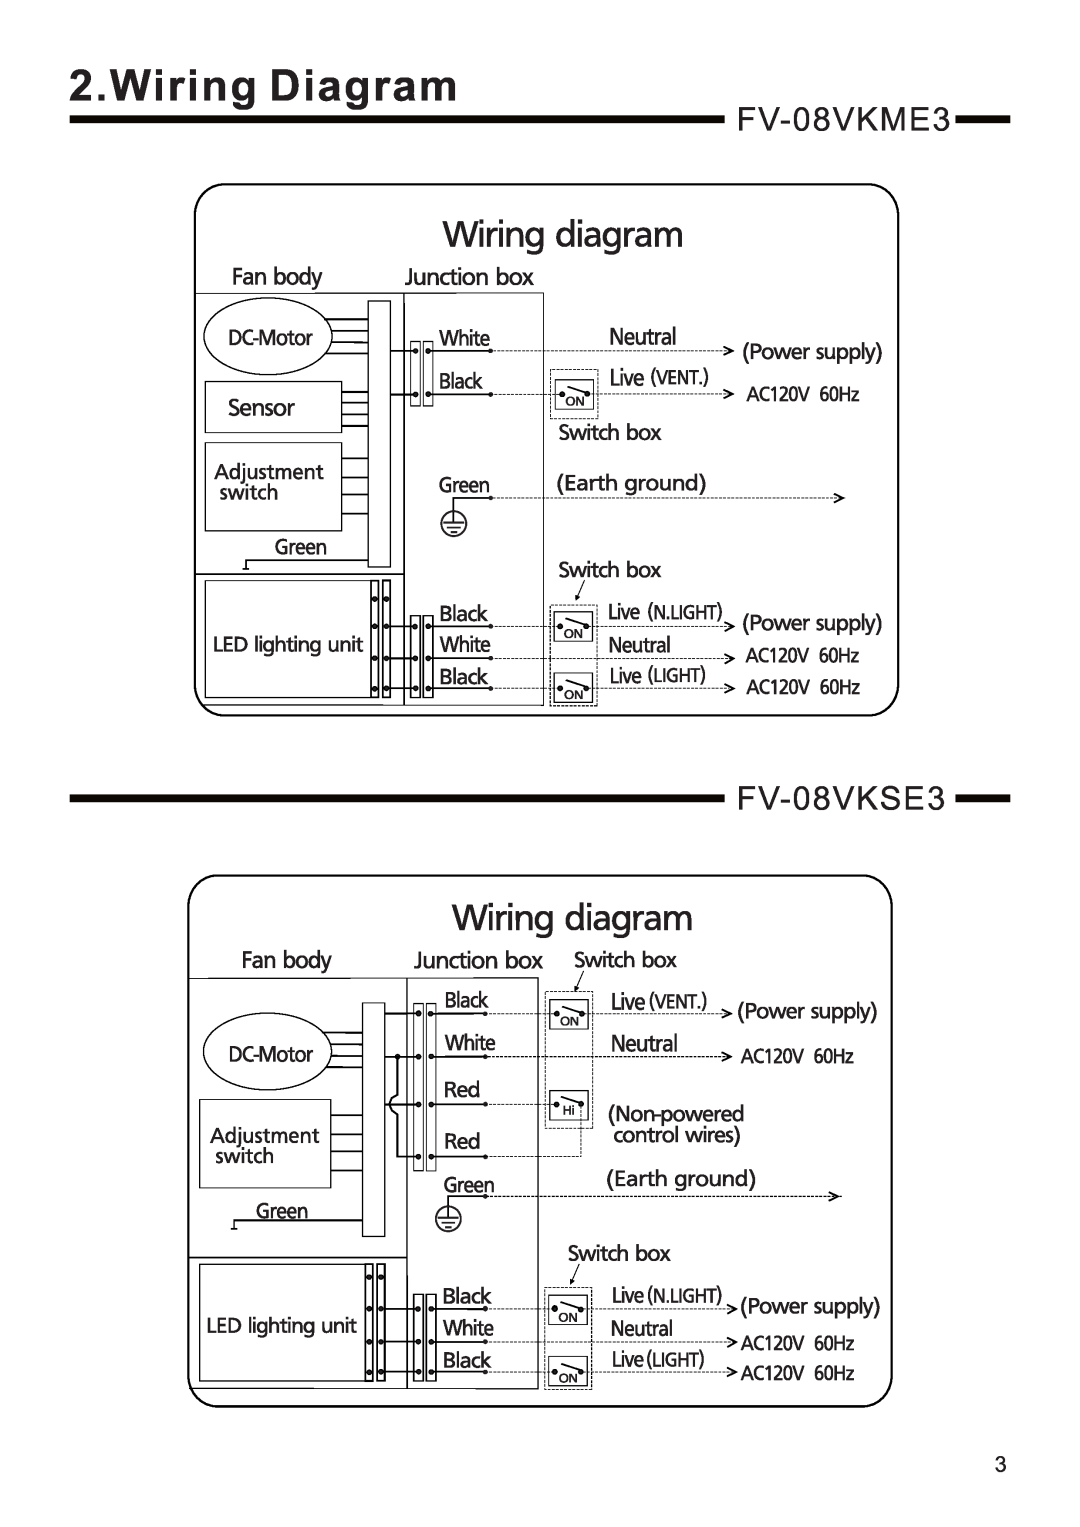 Panasonic service manual Wiring Diagram, FV-08VKME3 FV-08VKSE3 